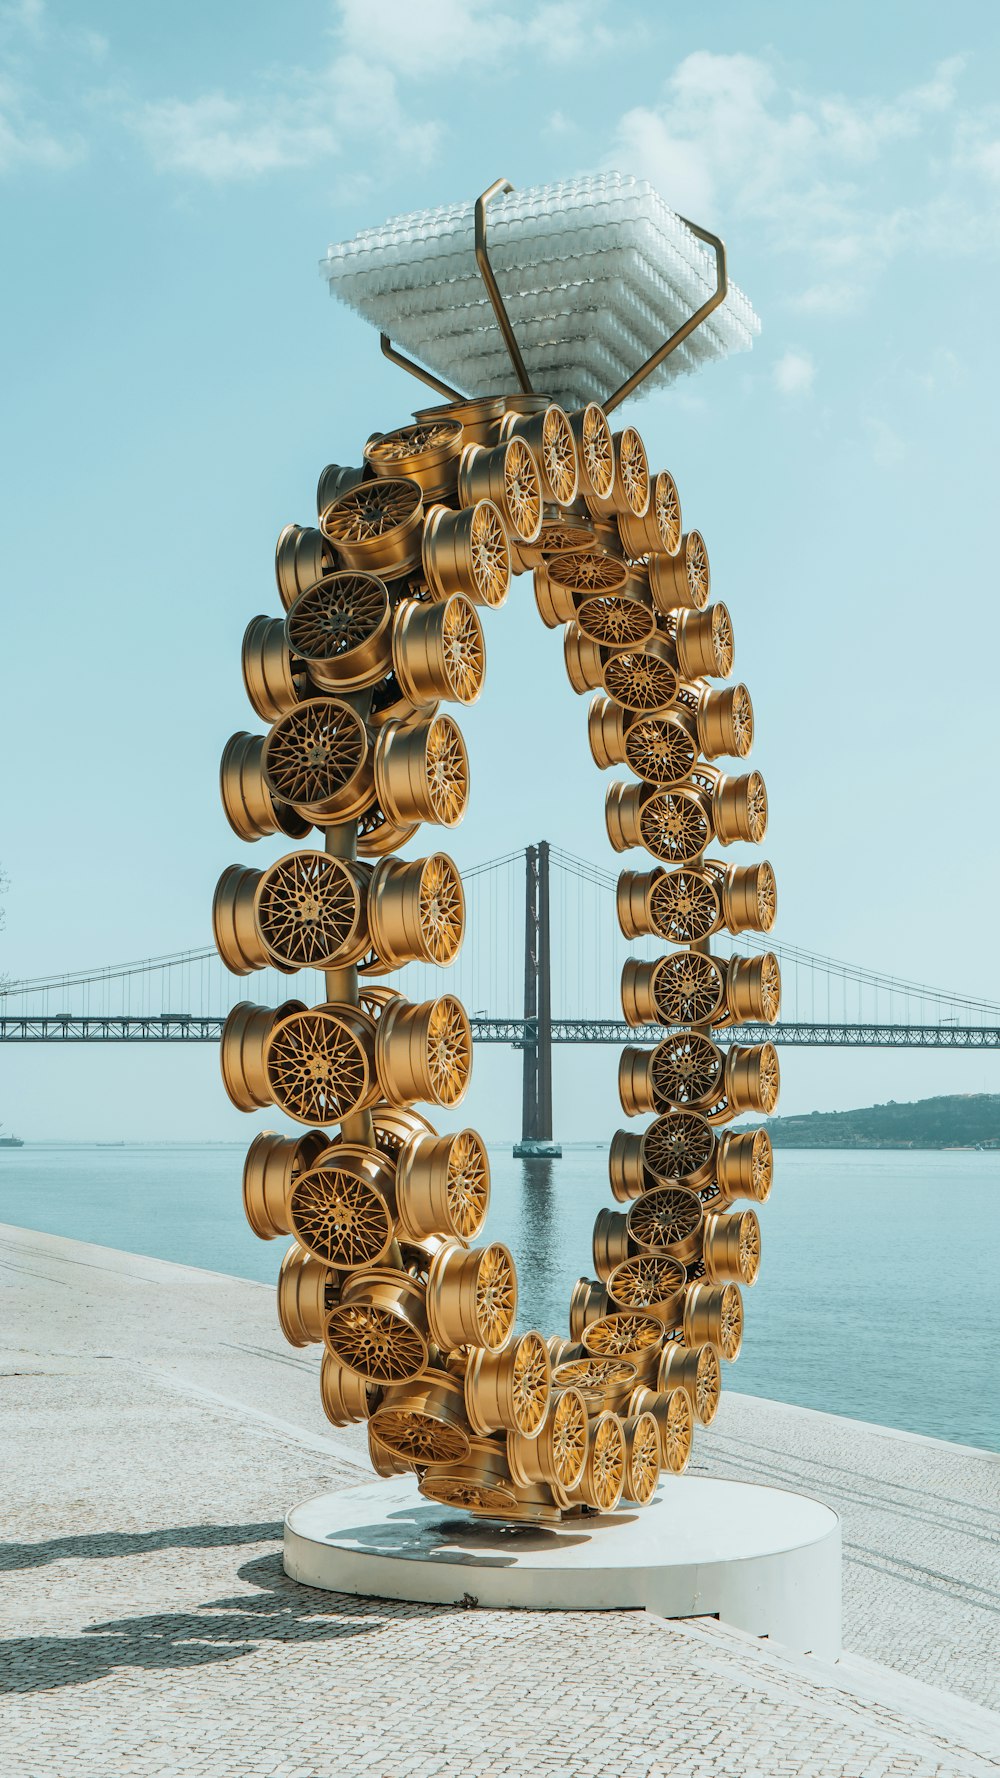 a sculpture made of gold wheels on a white pedestal